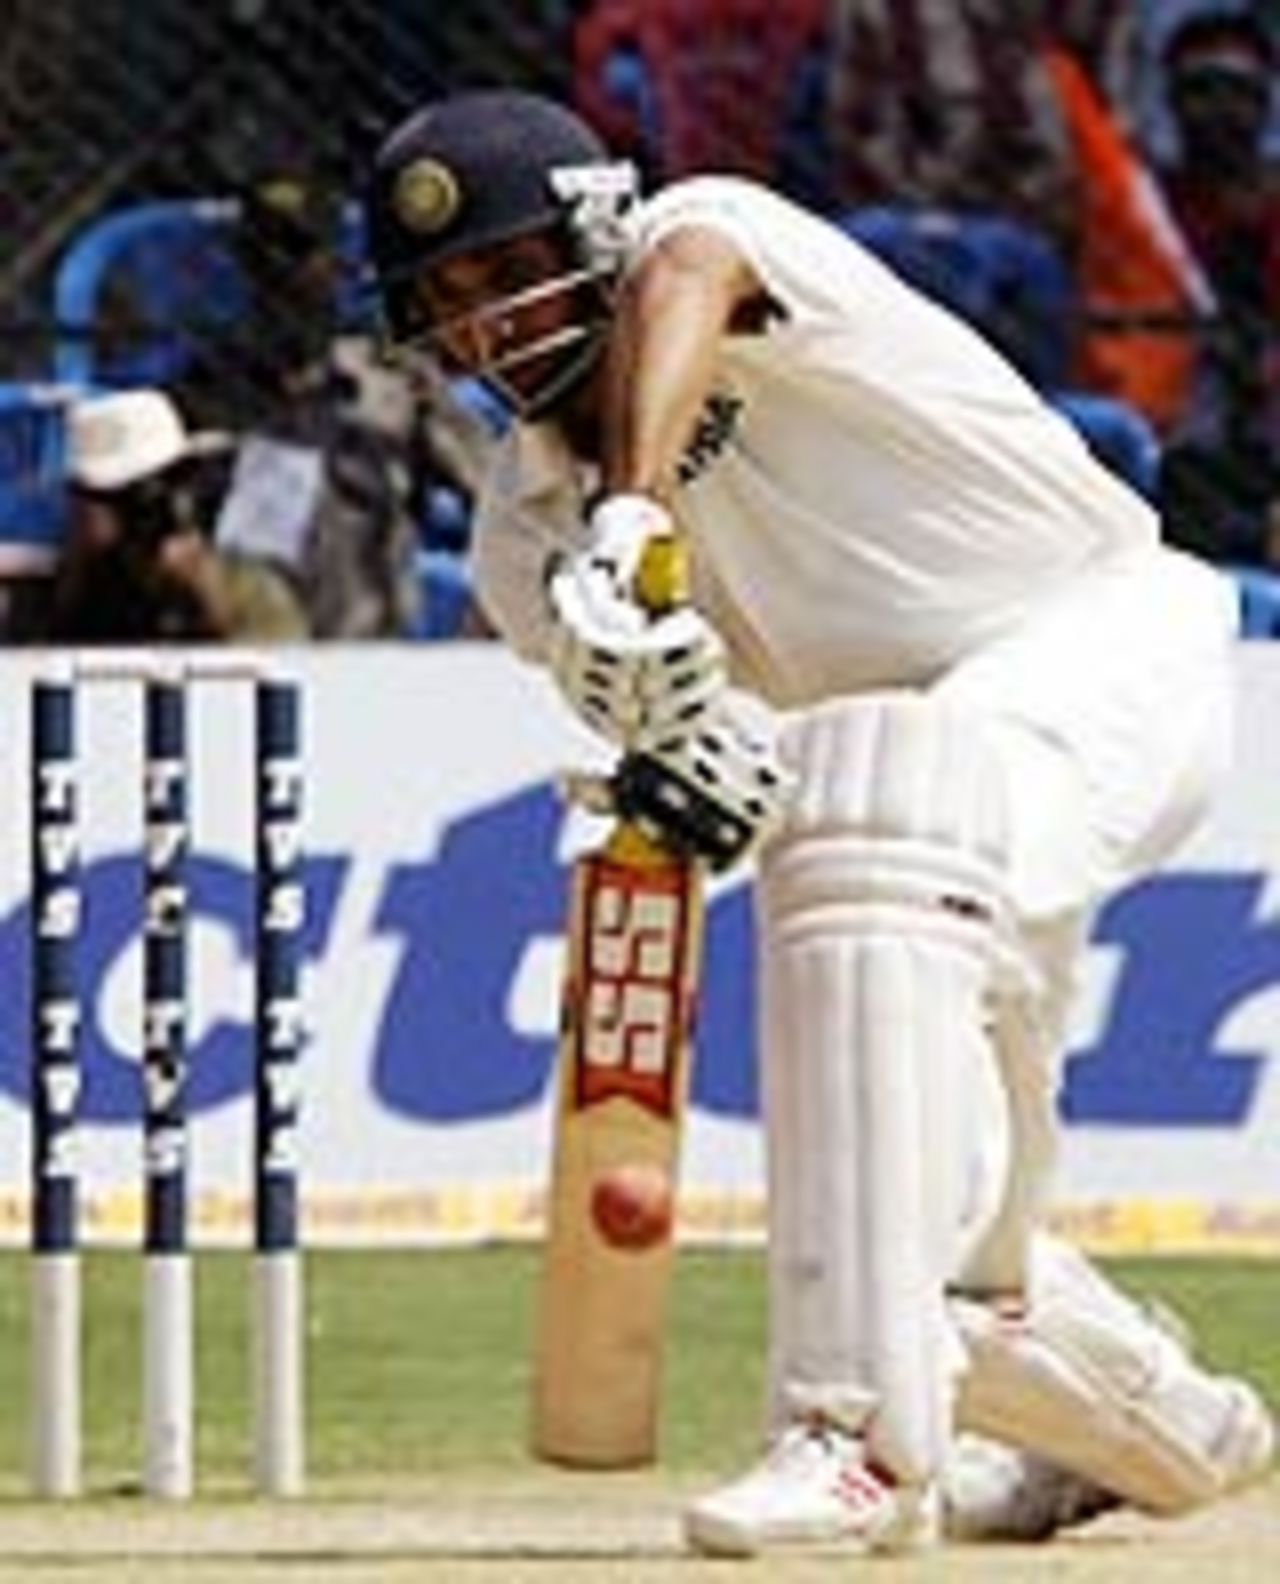 VVS Laxman hits a boundary, India v Pakistan, 3rd Test, Bangalore, 4th day, March 27, 2005